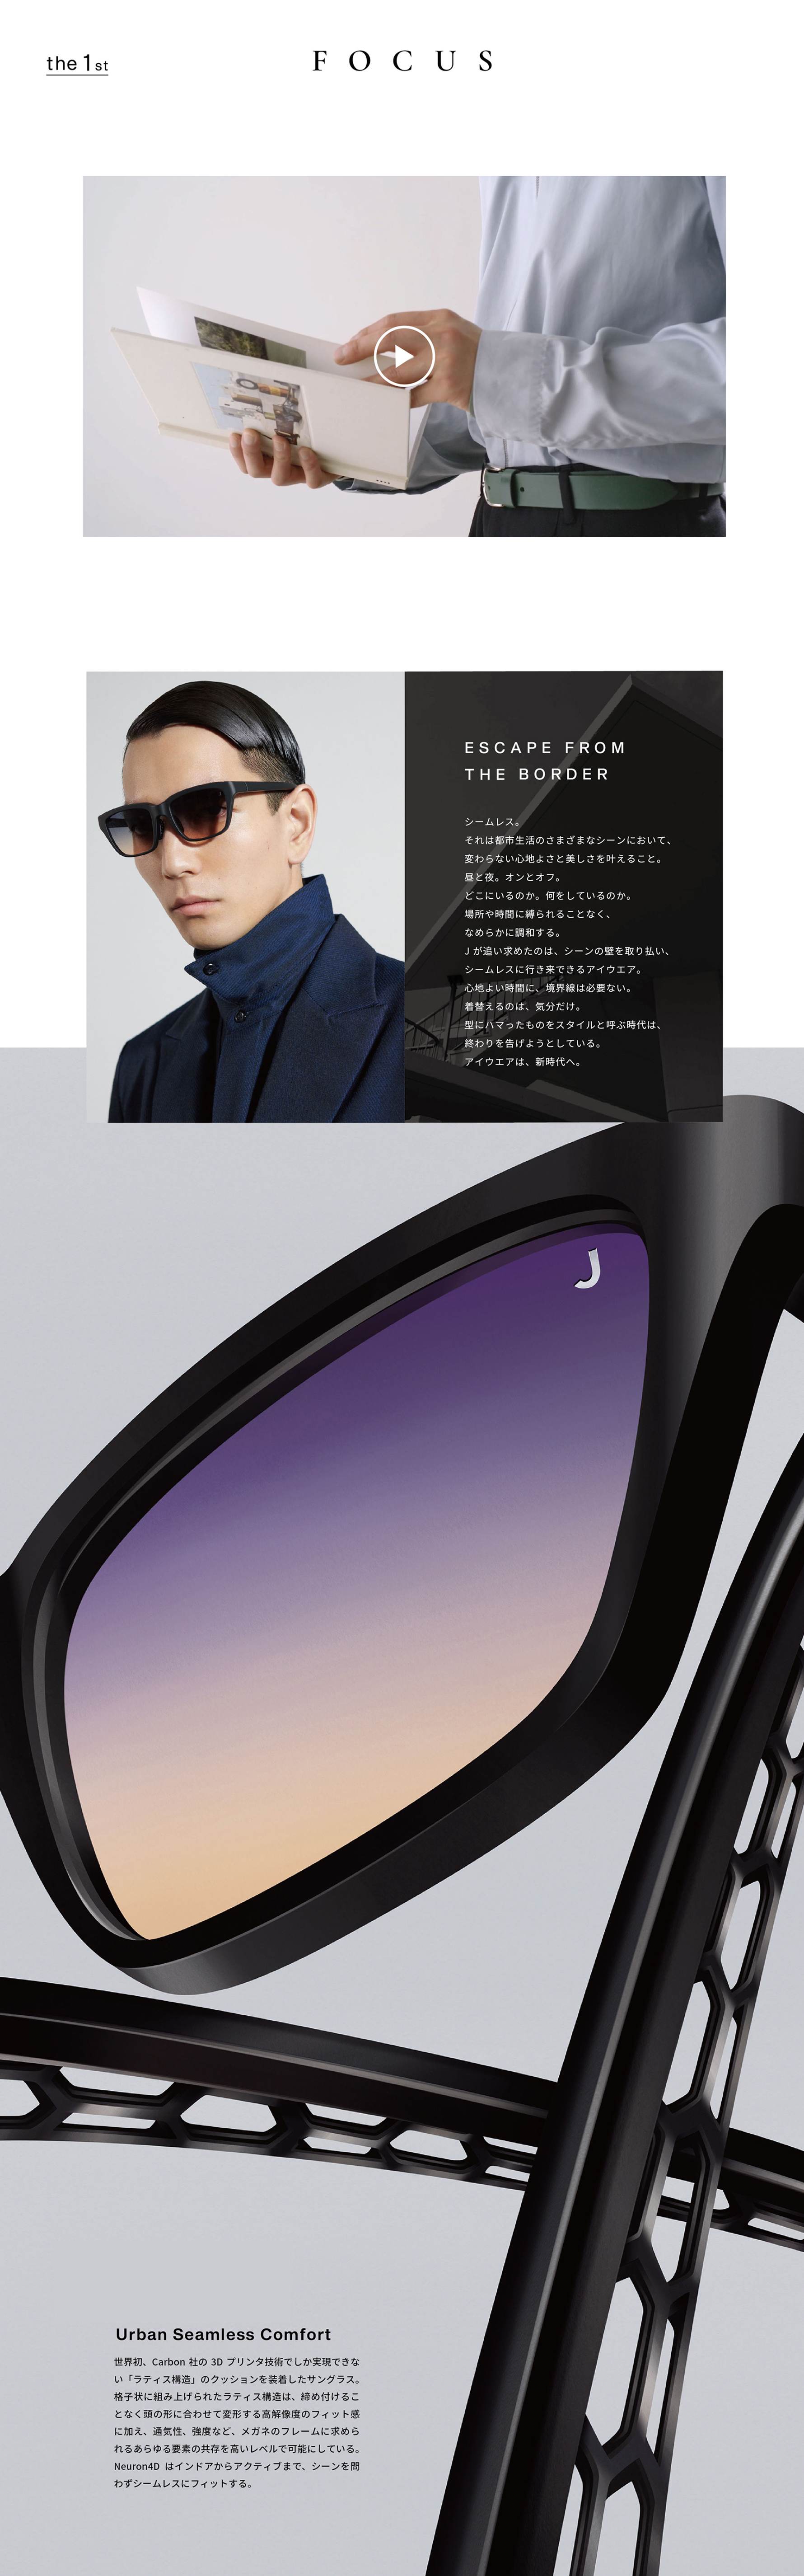 J eyewear Lab   Brand Website